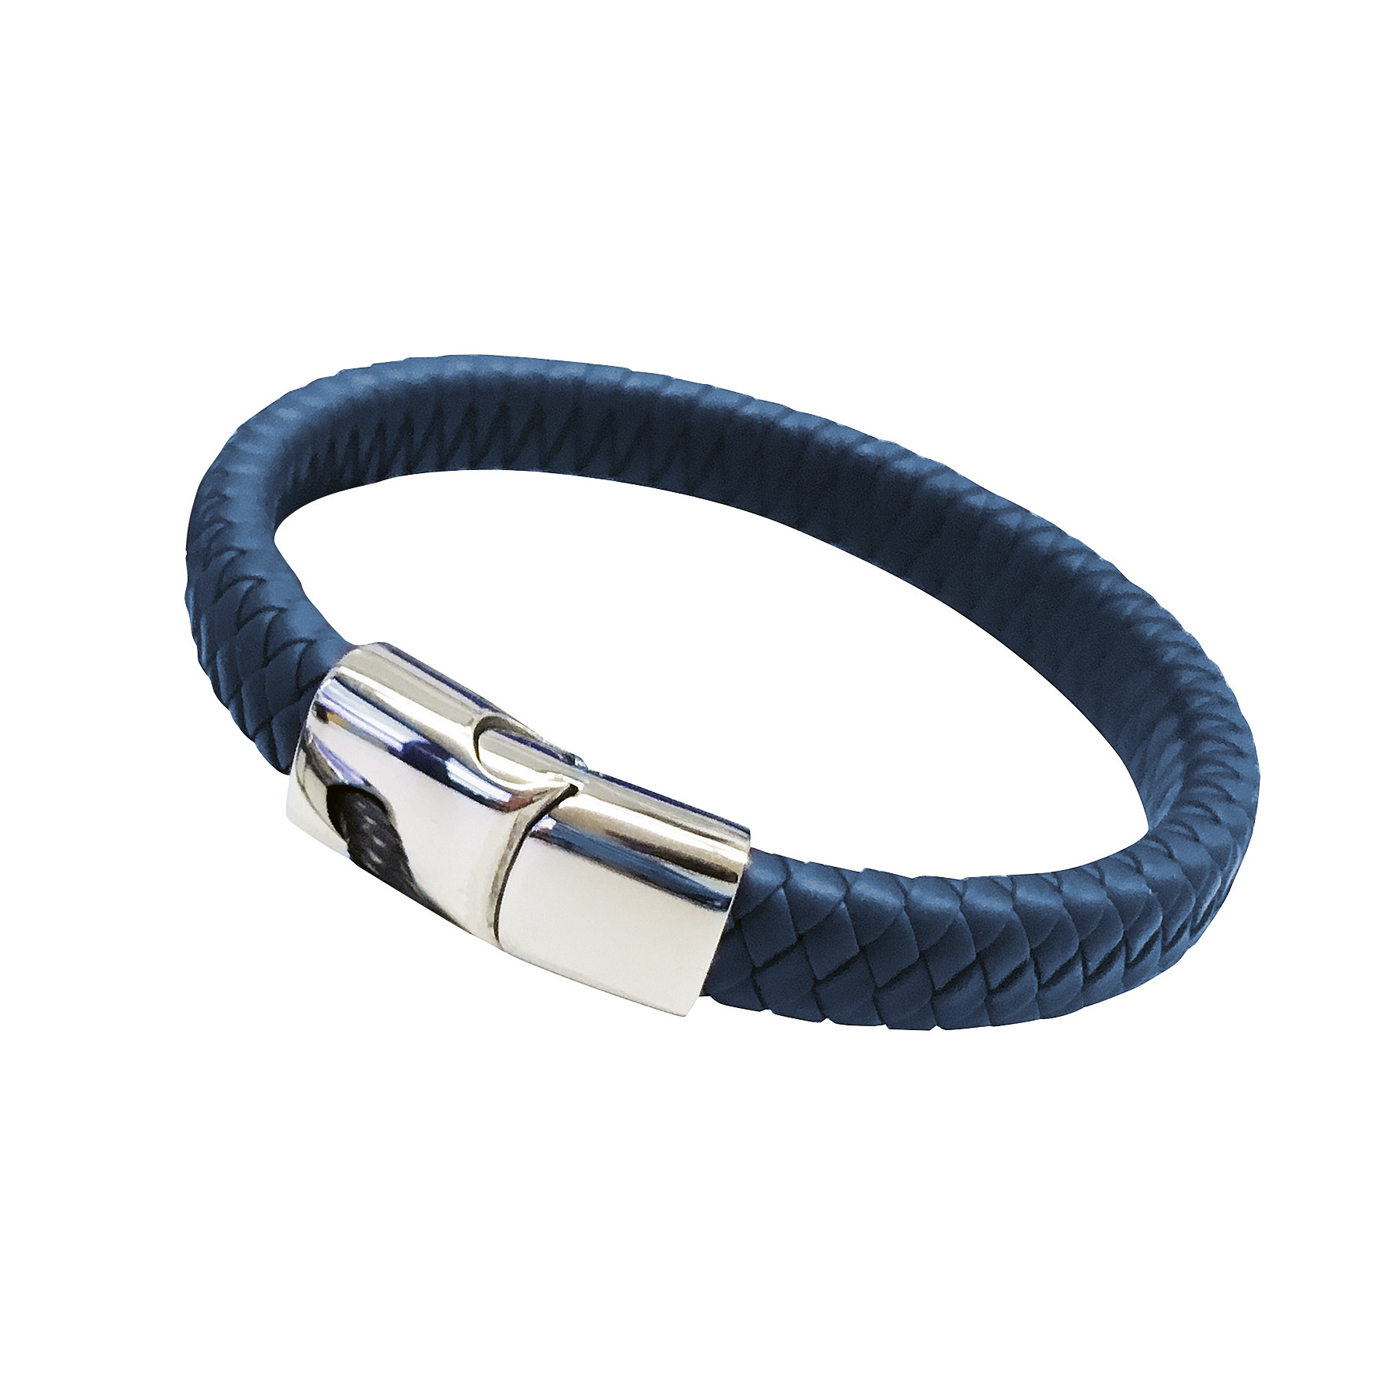 Kautschuk-Armband, blau, Länge 21 cm - 1 Stück